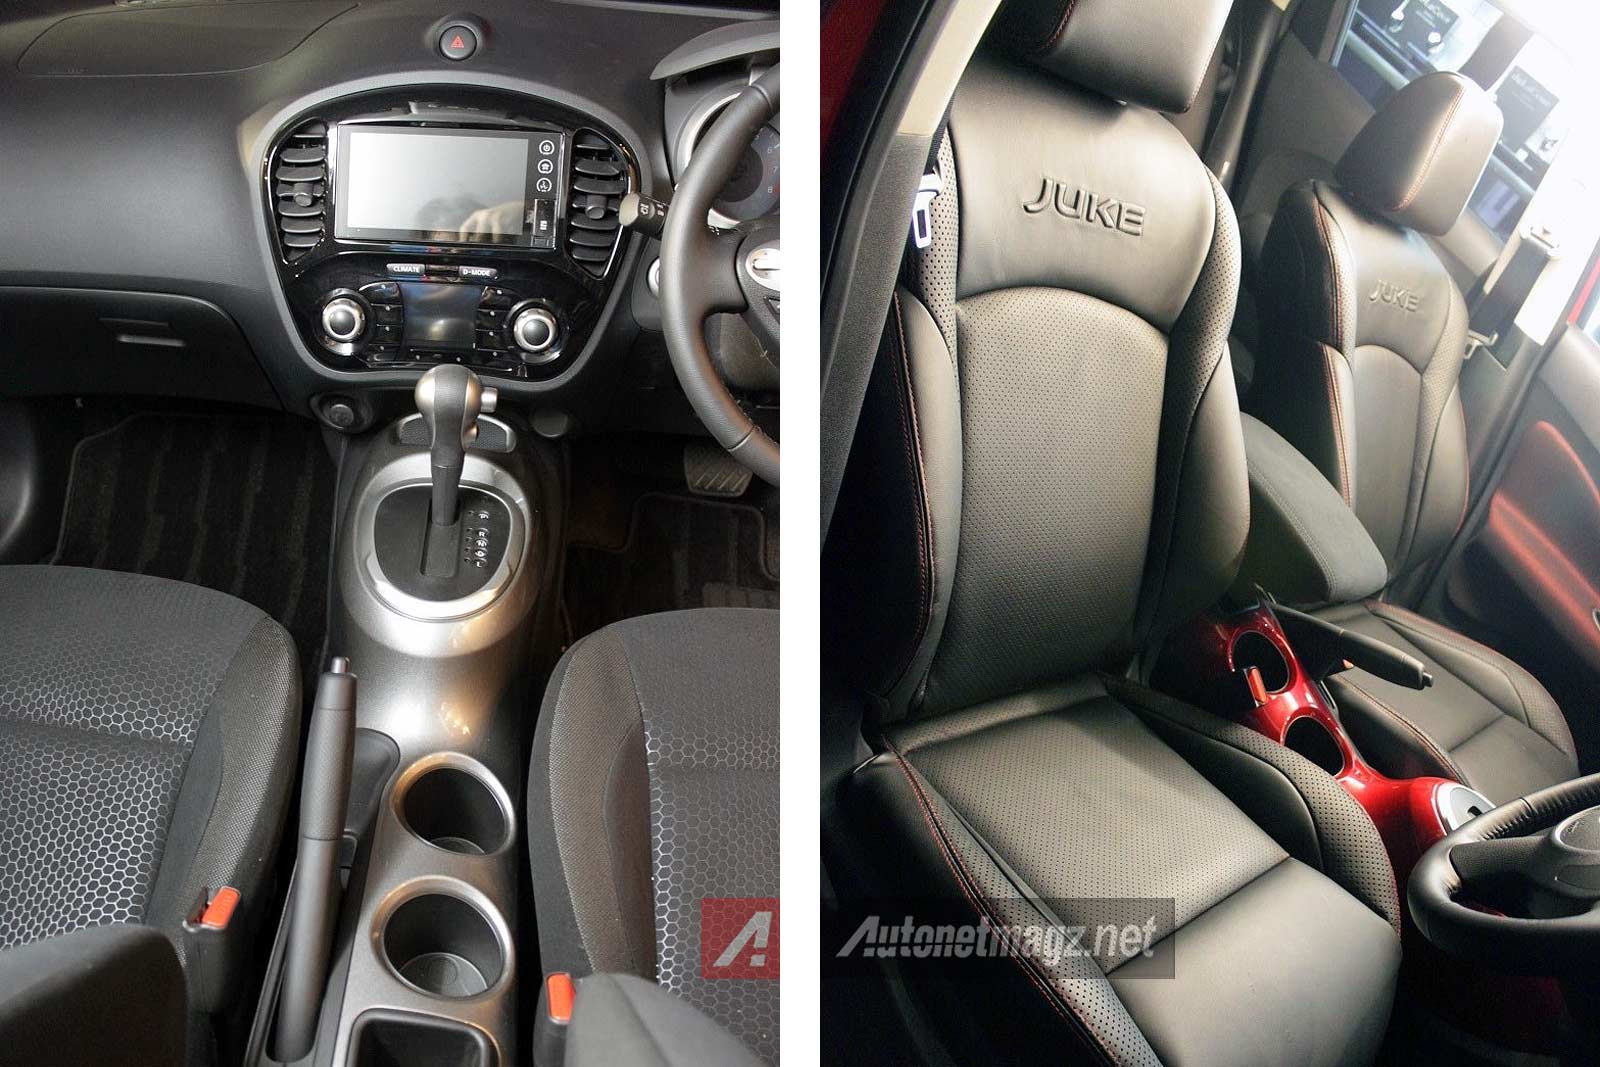 Mobil Baru, Head unit dan jok kulit Nissan Juke baru 2015 facelift: First Impression Review Nissan Juke Facelift 2015 dan Juke Revolt oleh AutonetMagz